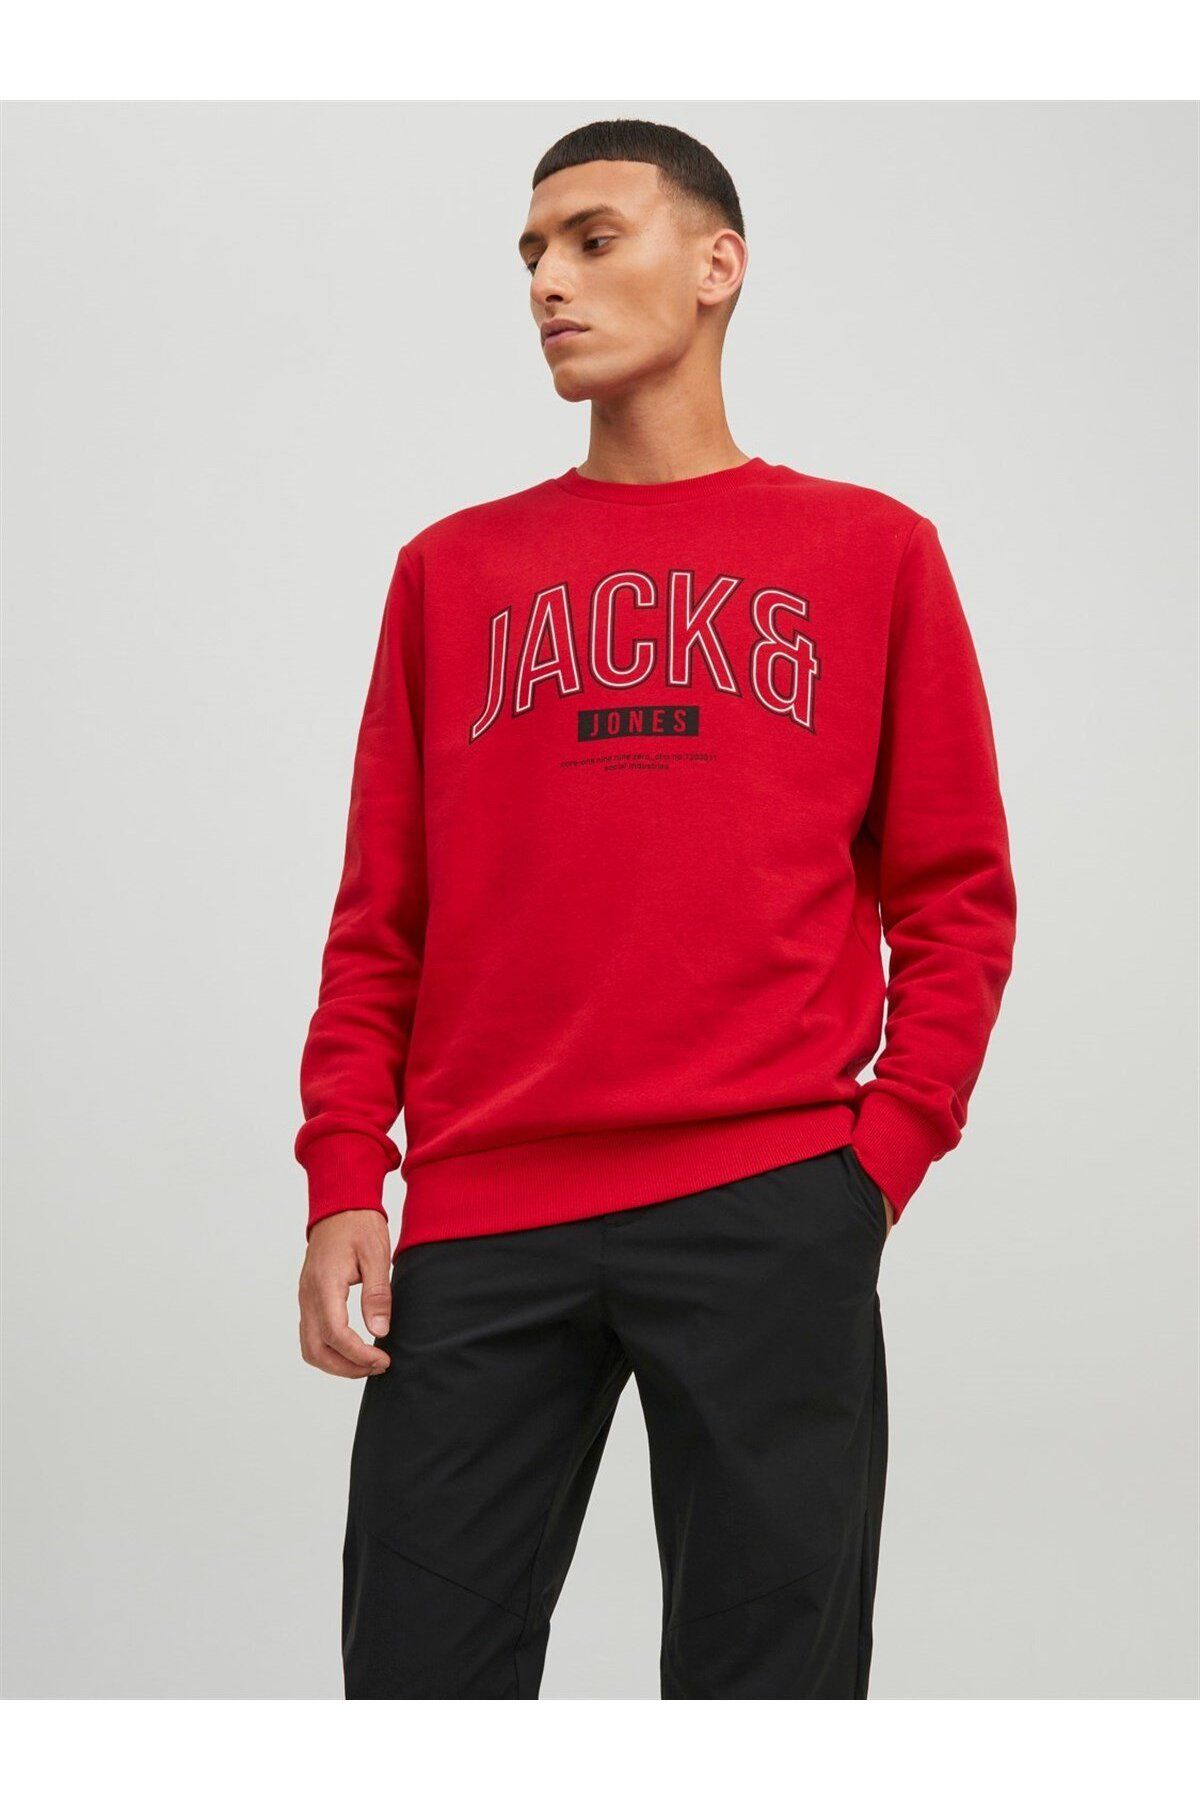 Jack & Jones Jack&jones Jcothomas Erkek Sweatshirt 12219828